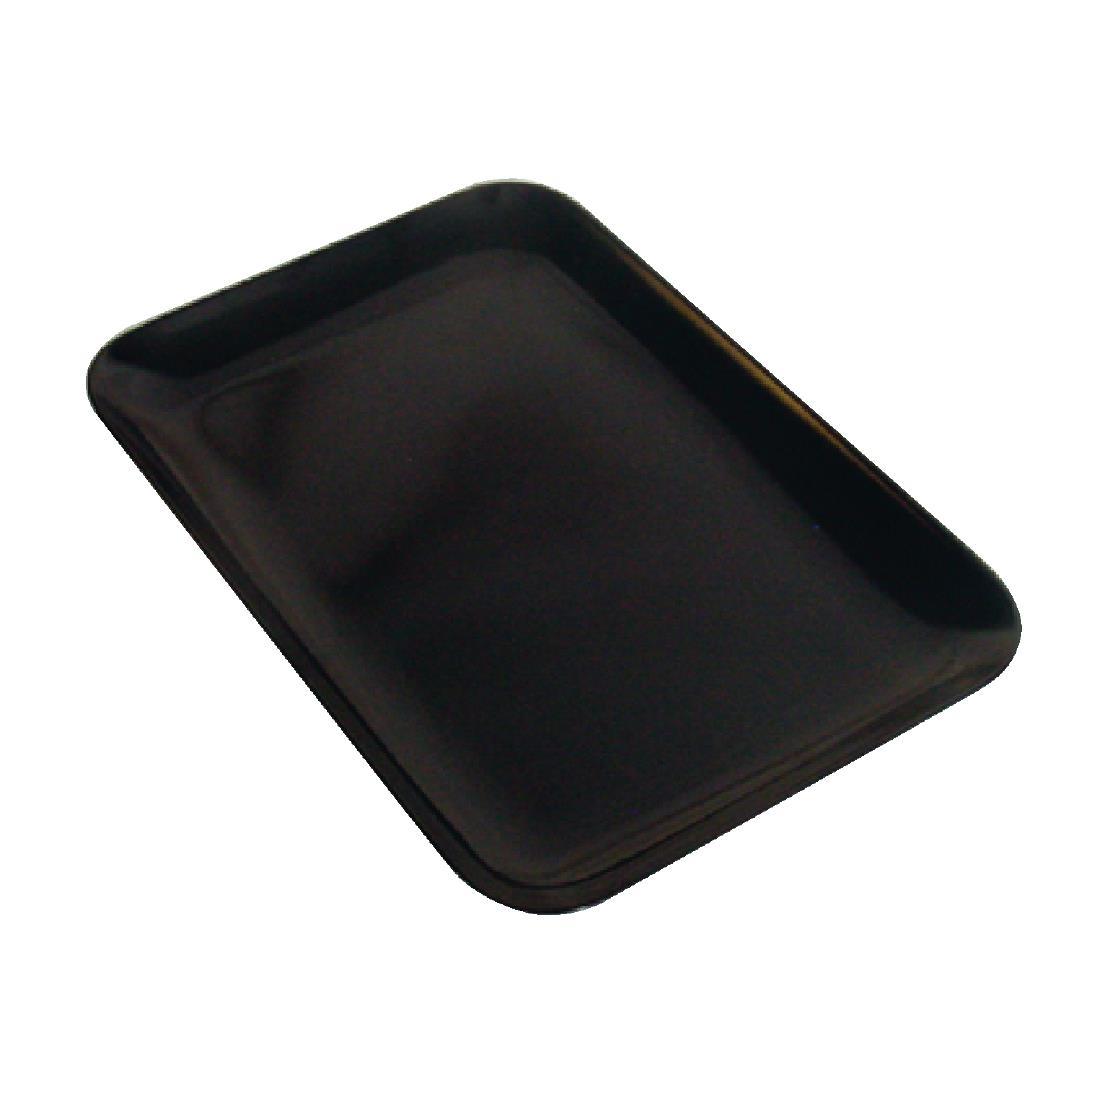 Dalebrook Melamine Medium Rectangular Platter Black 290mm - J896  - 1